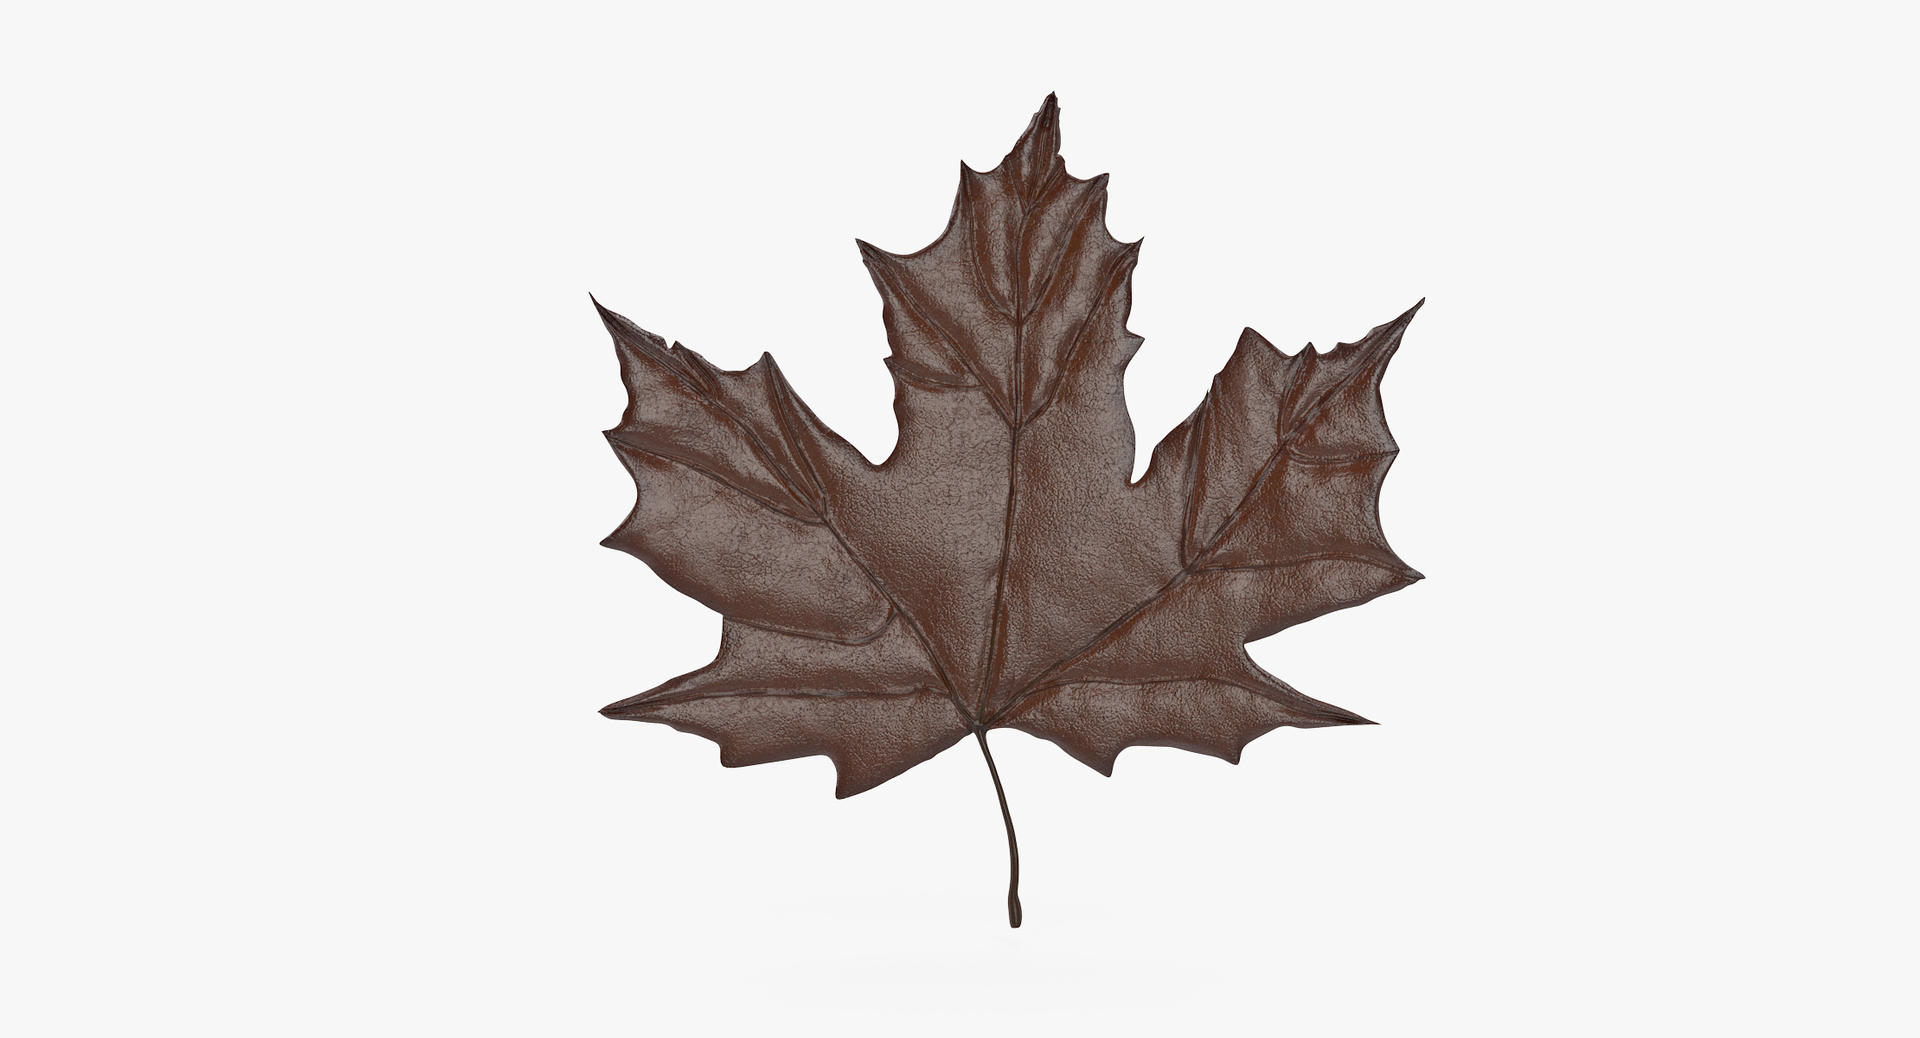 3d model of brown maple leaf